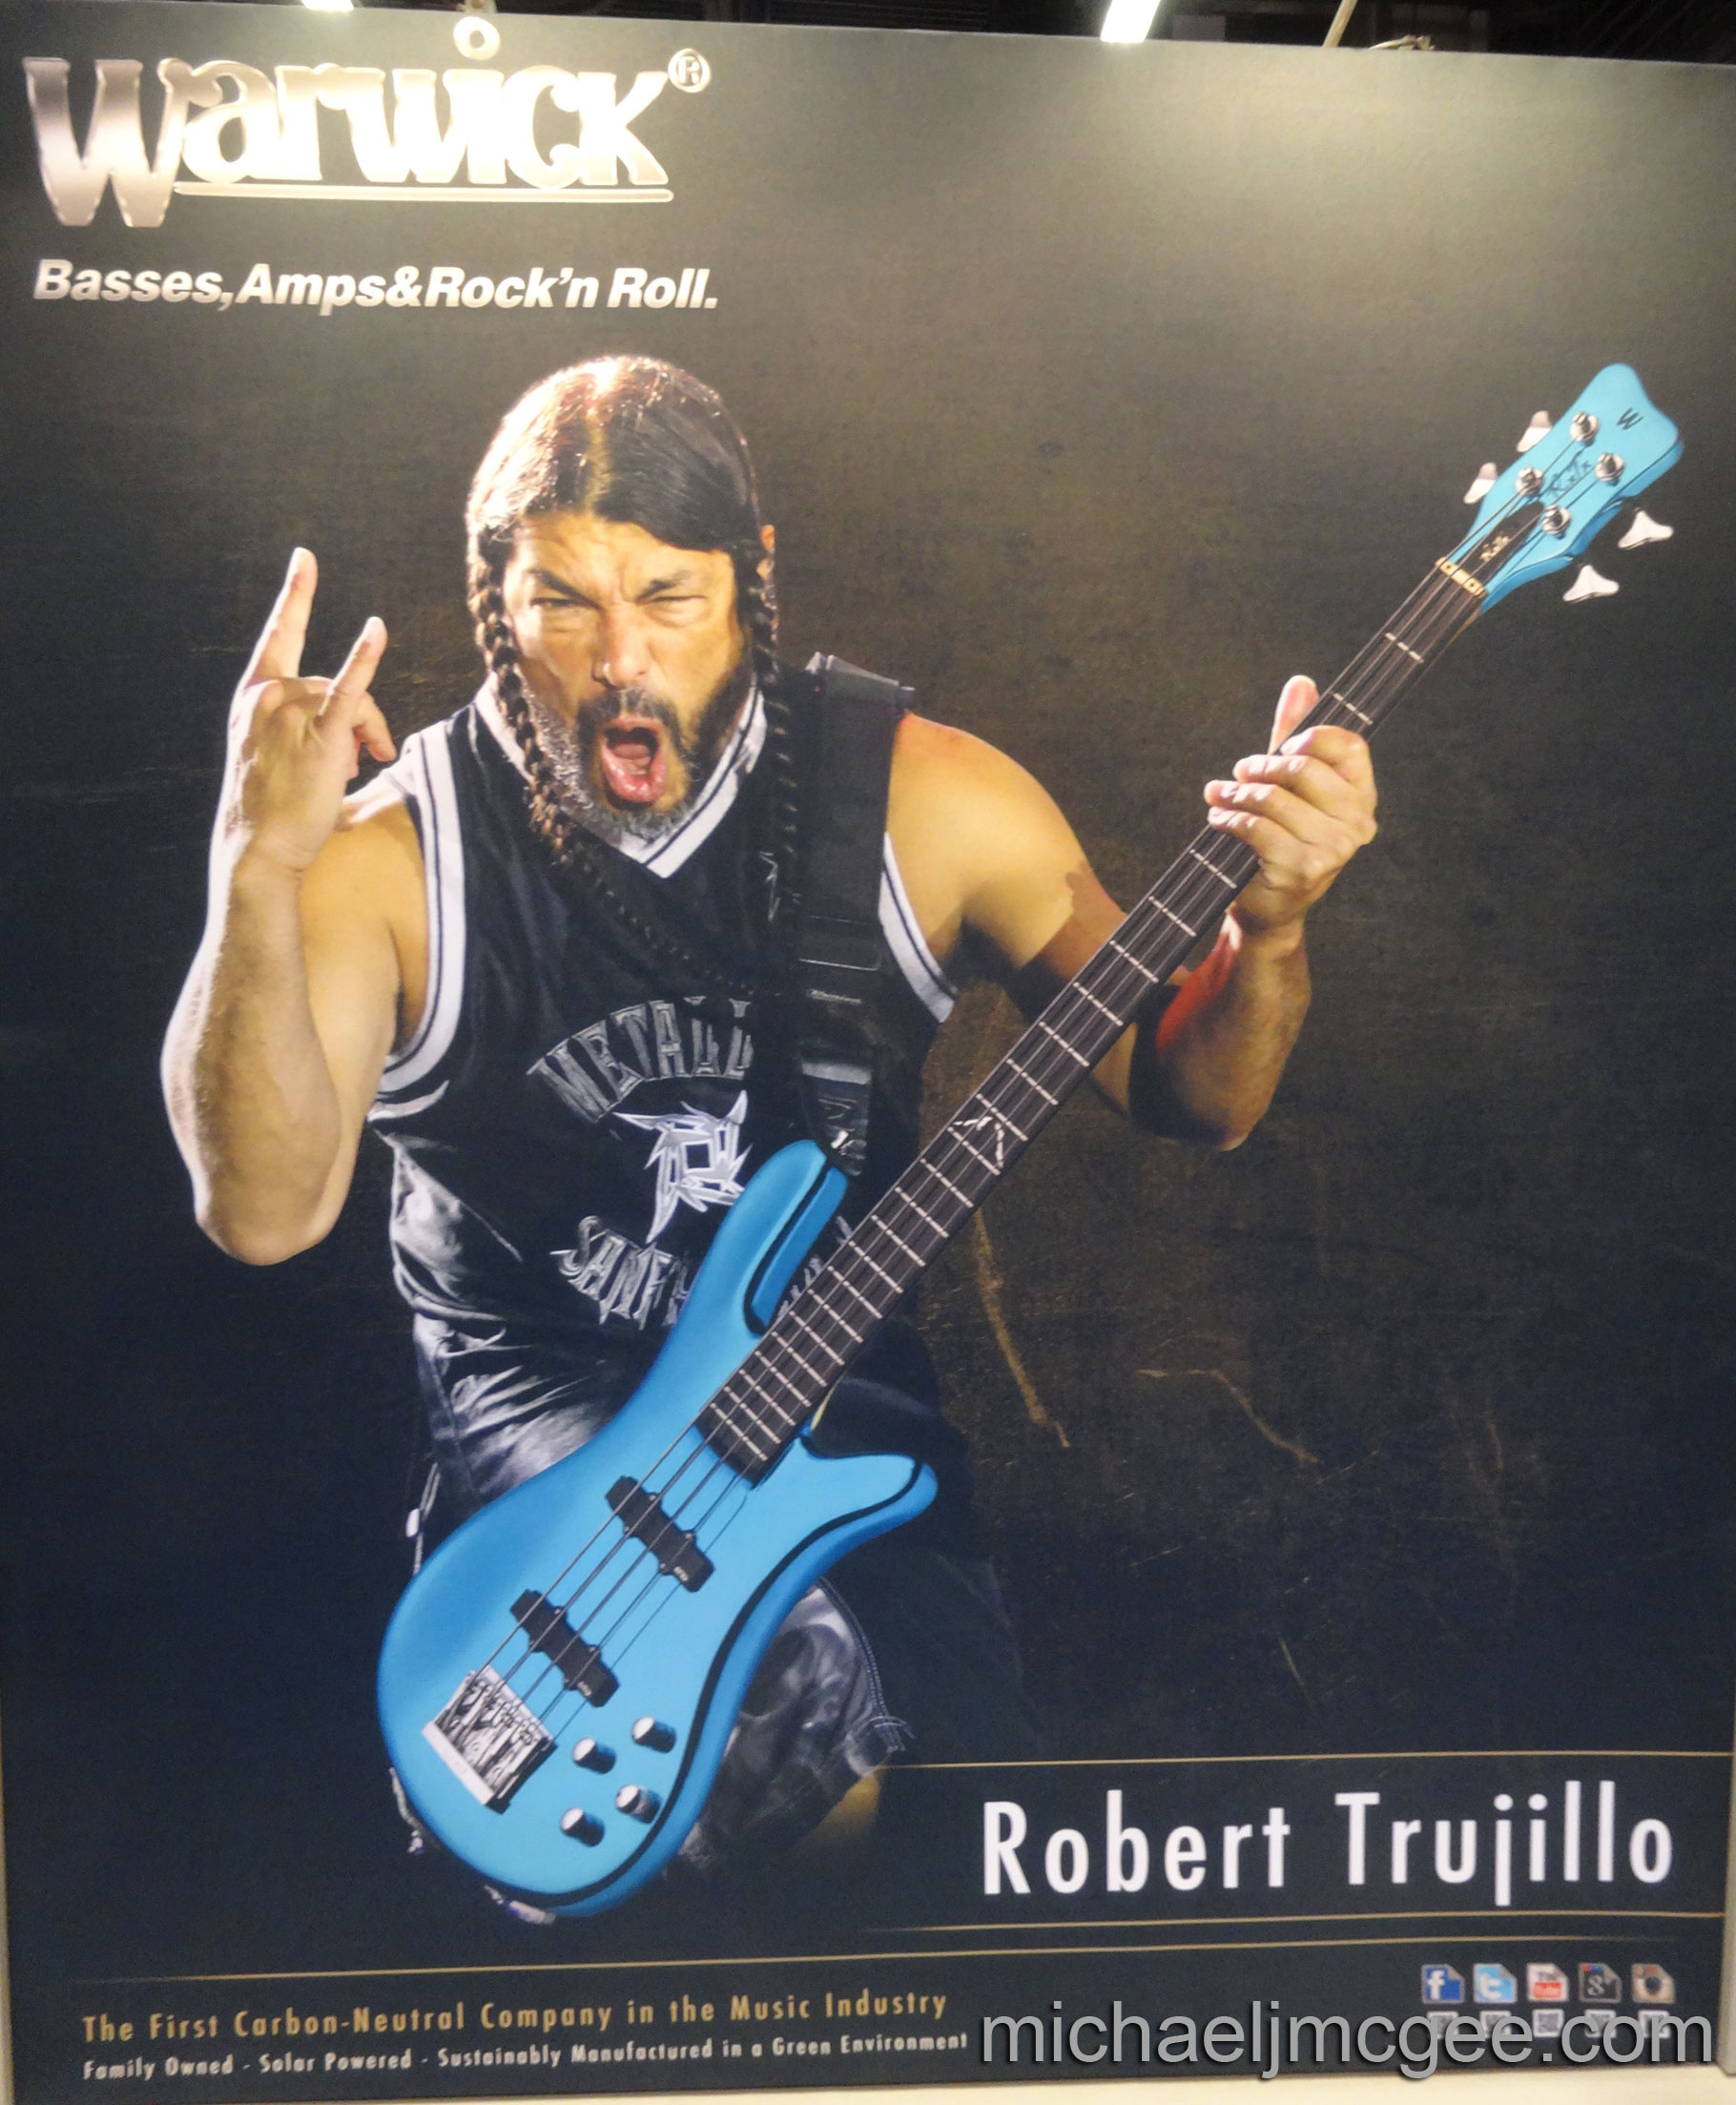 Robert Trujillo / michaeljmcgee.com